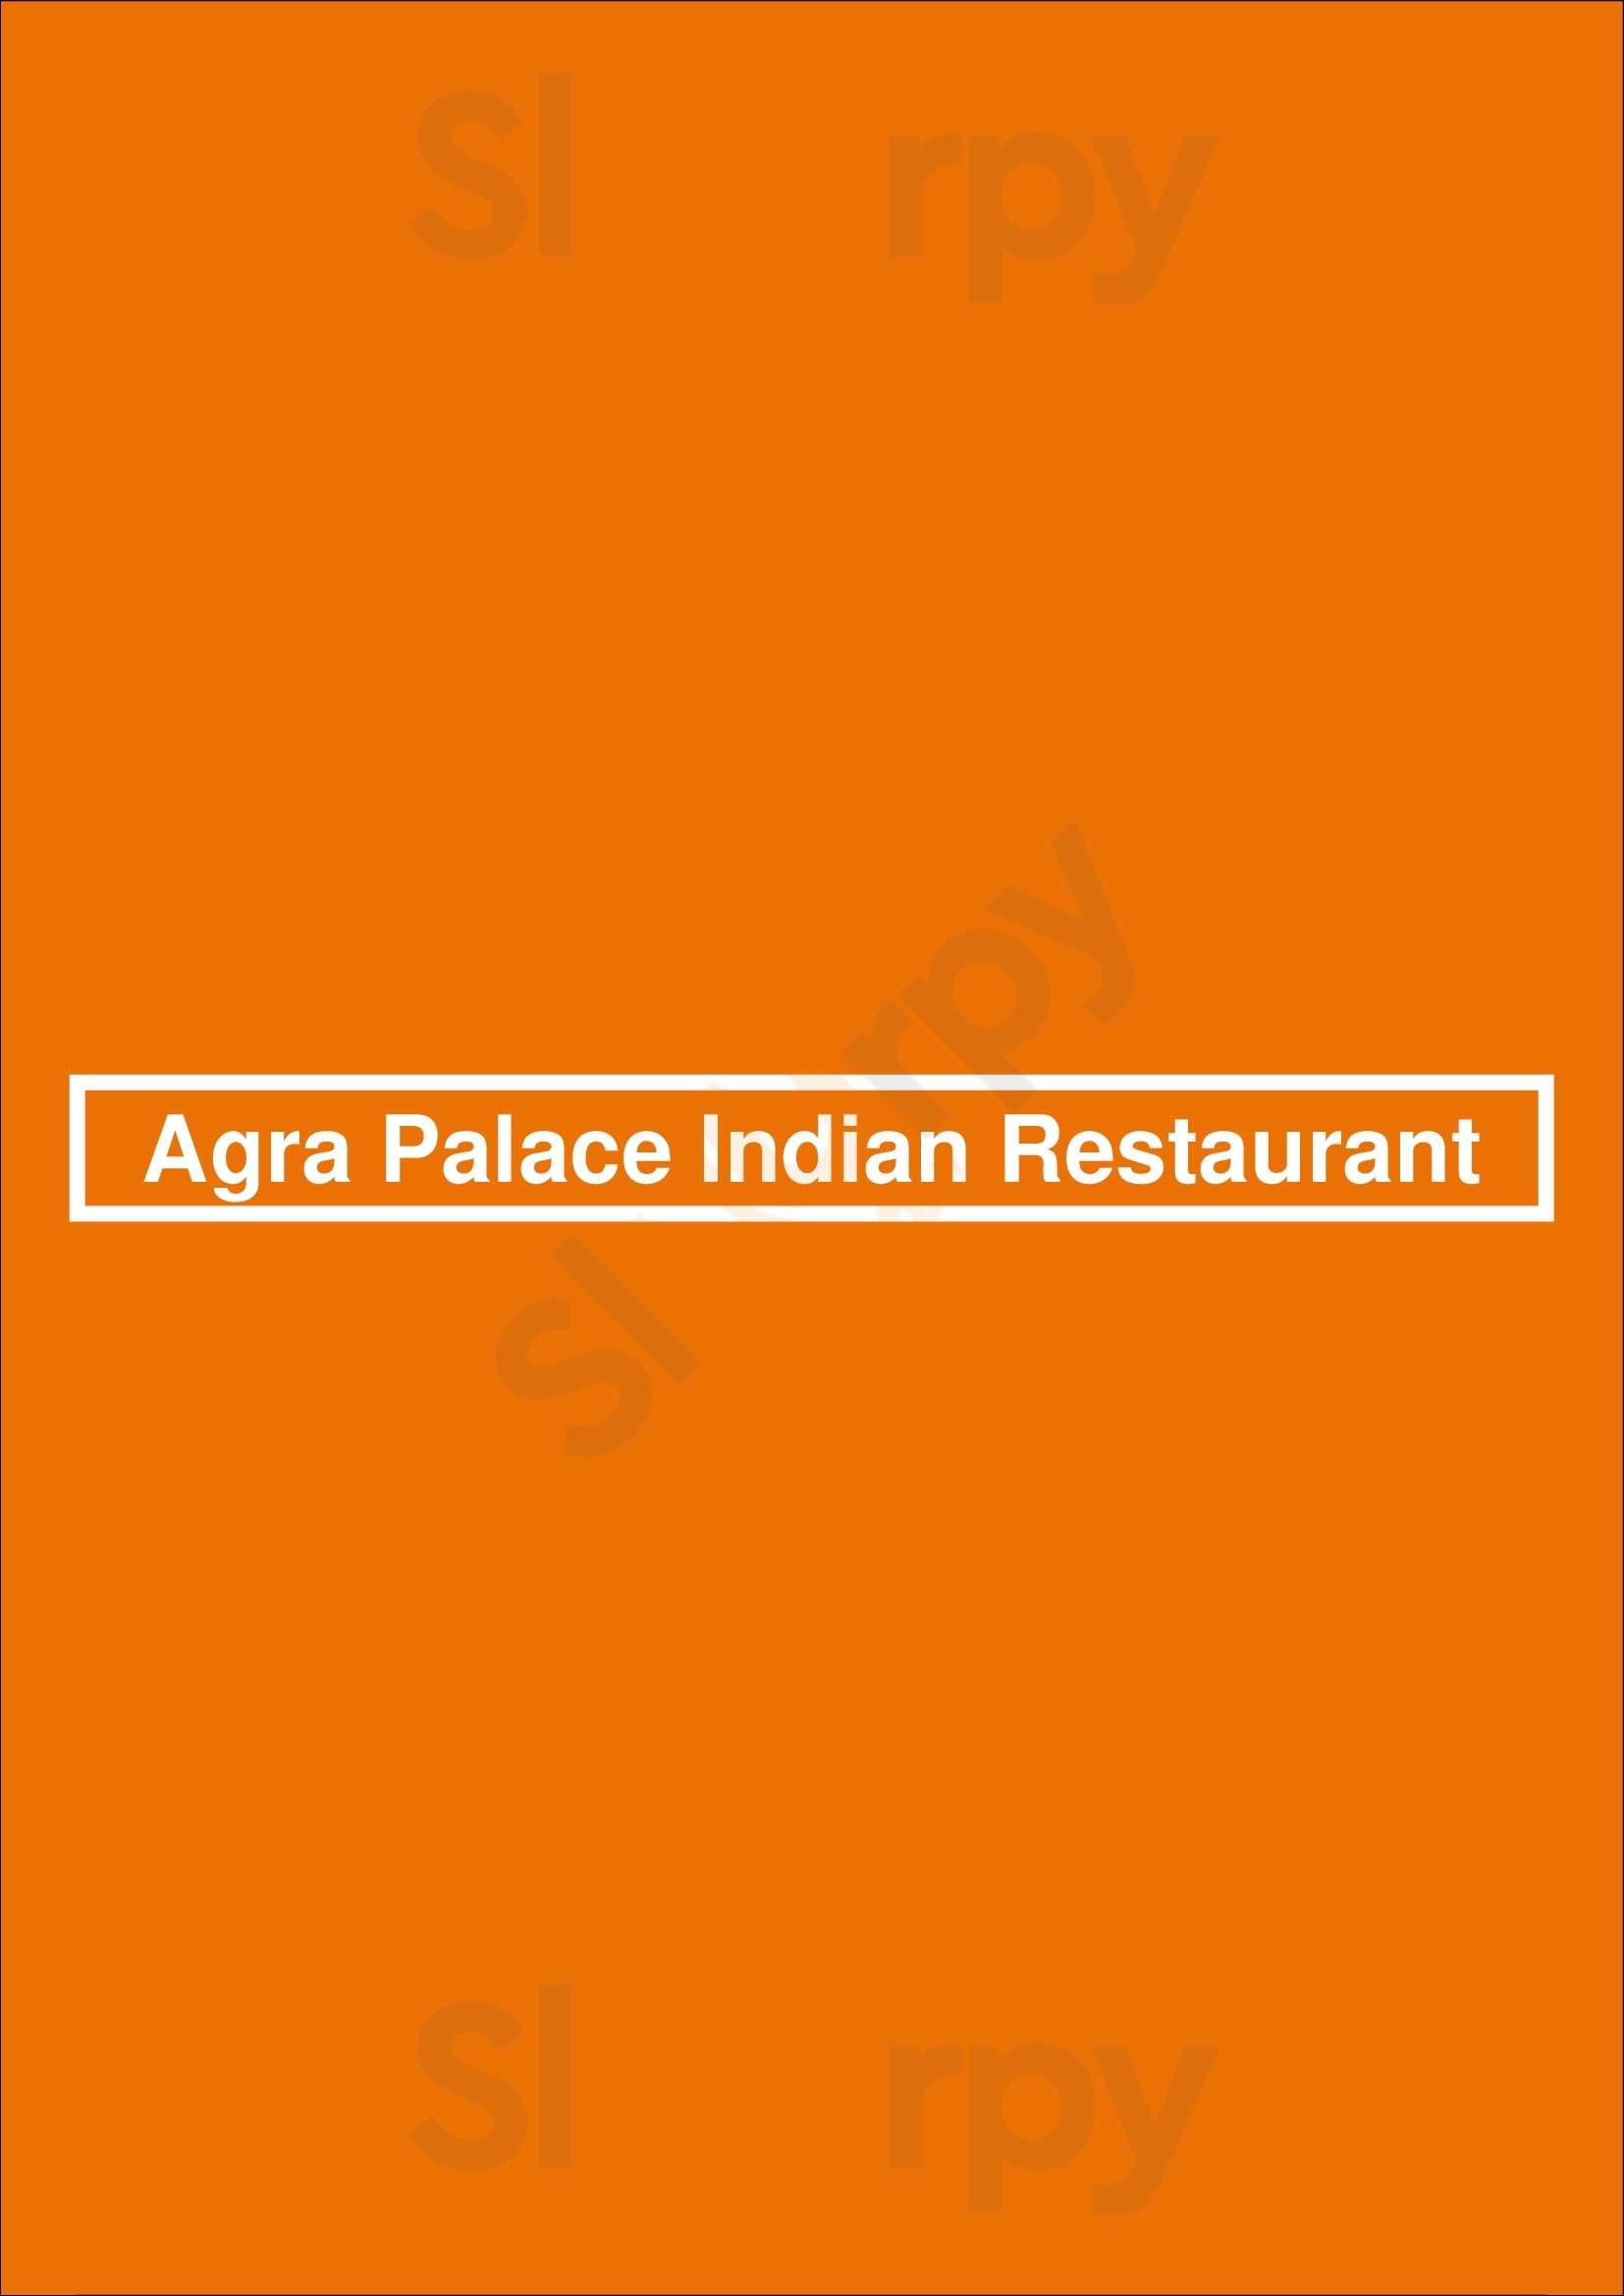 Agra Palace Indian Restaurant Madrid Menu - 1